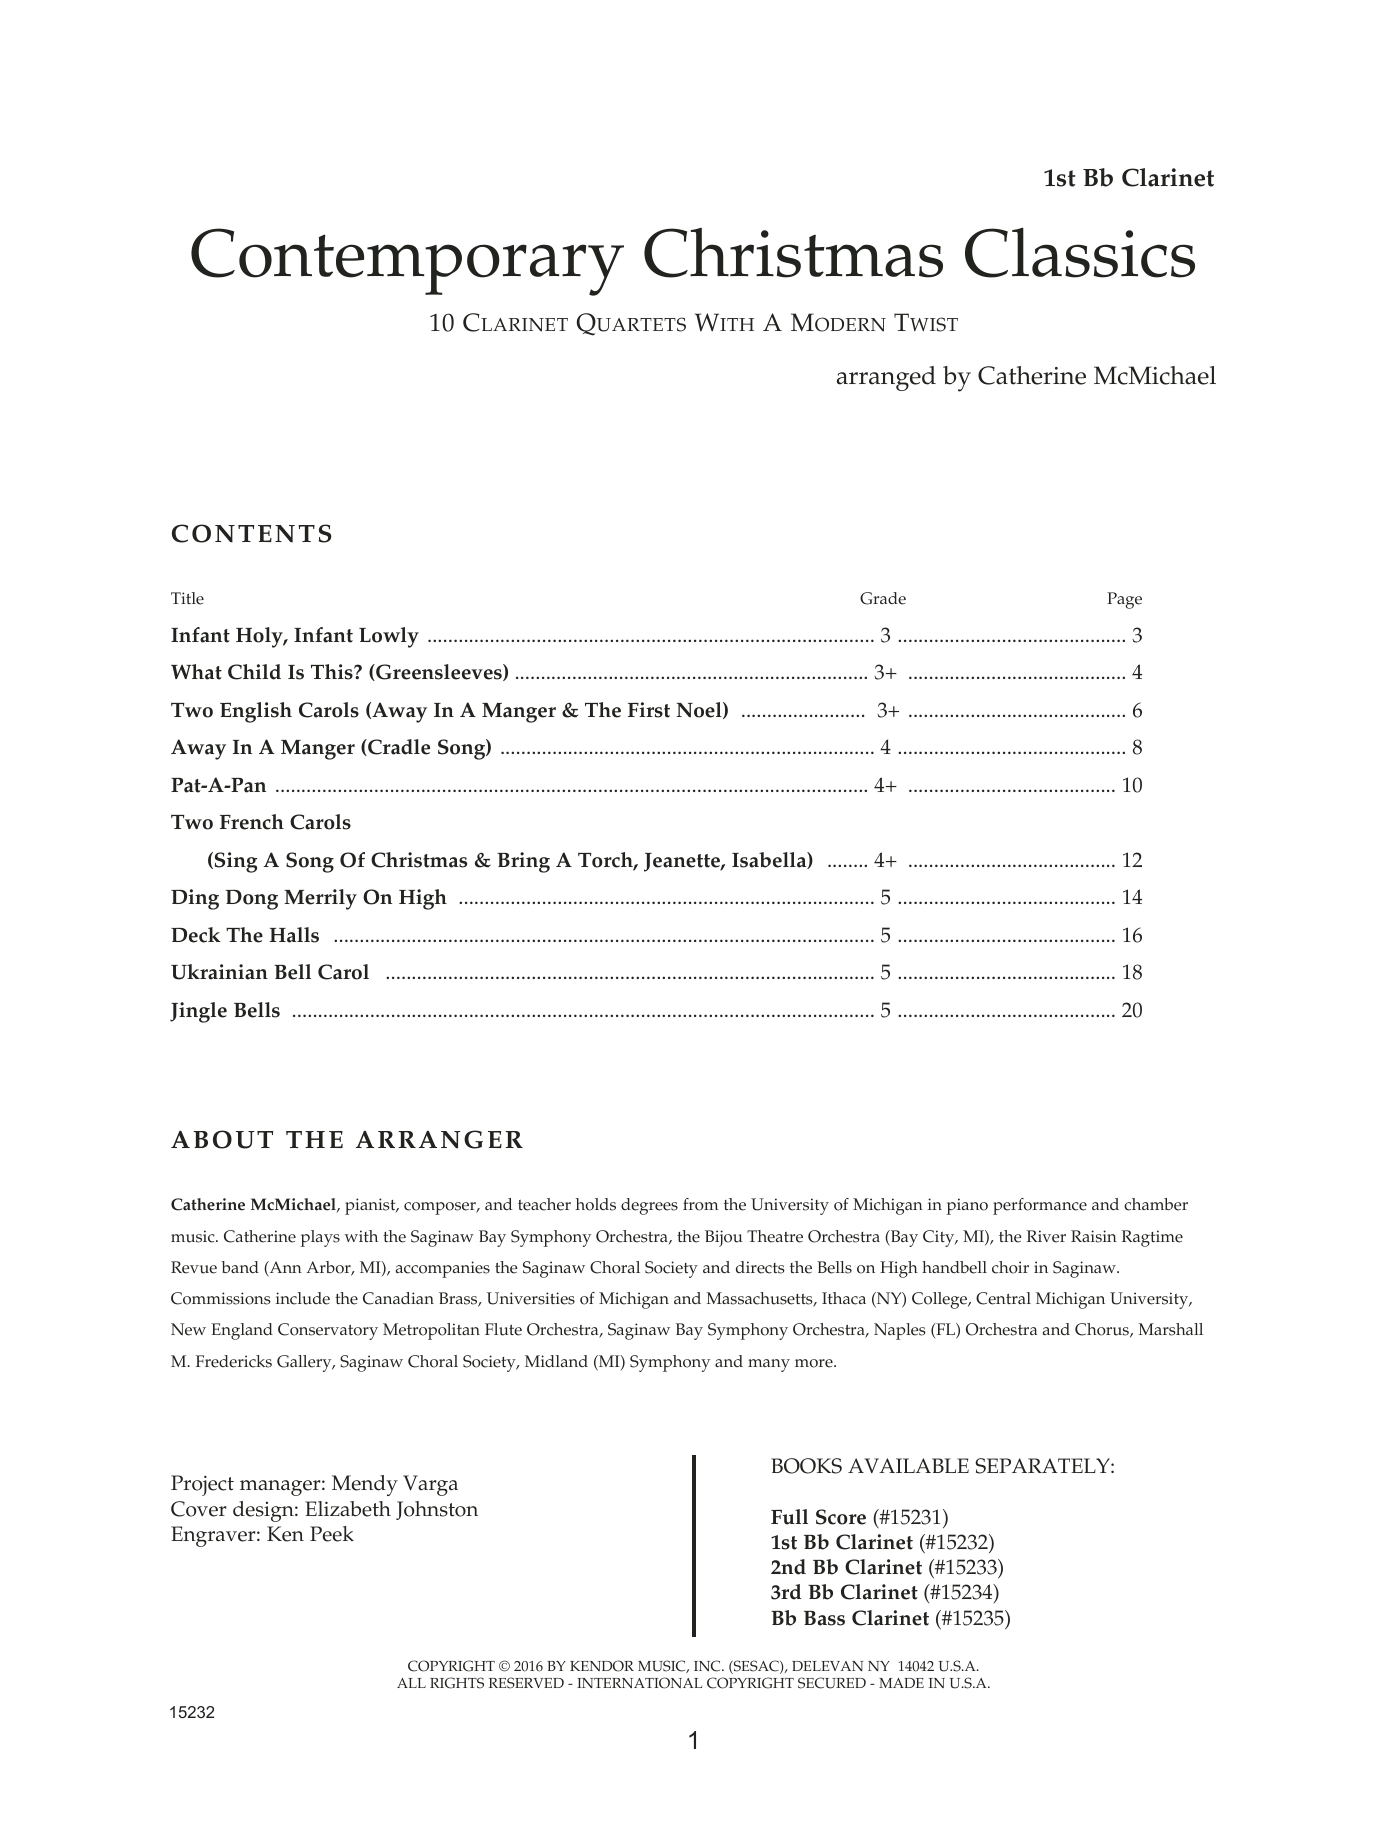 Contemporary Christmas Classics - 1st Bb Clarinet (Woodwind Ensemble) von Catherine McMichael